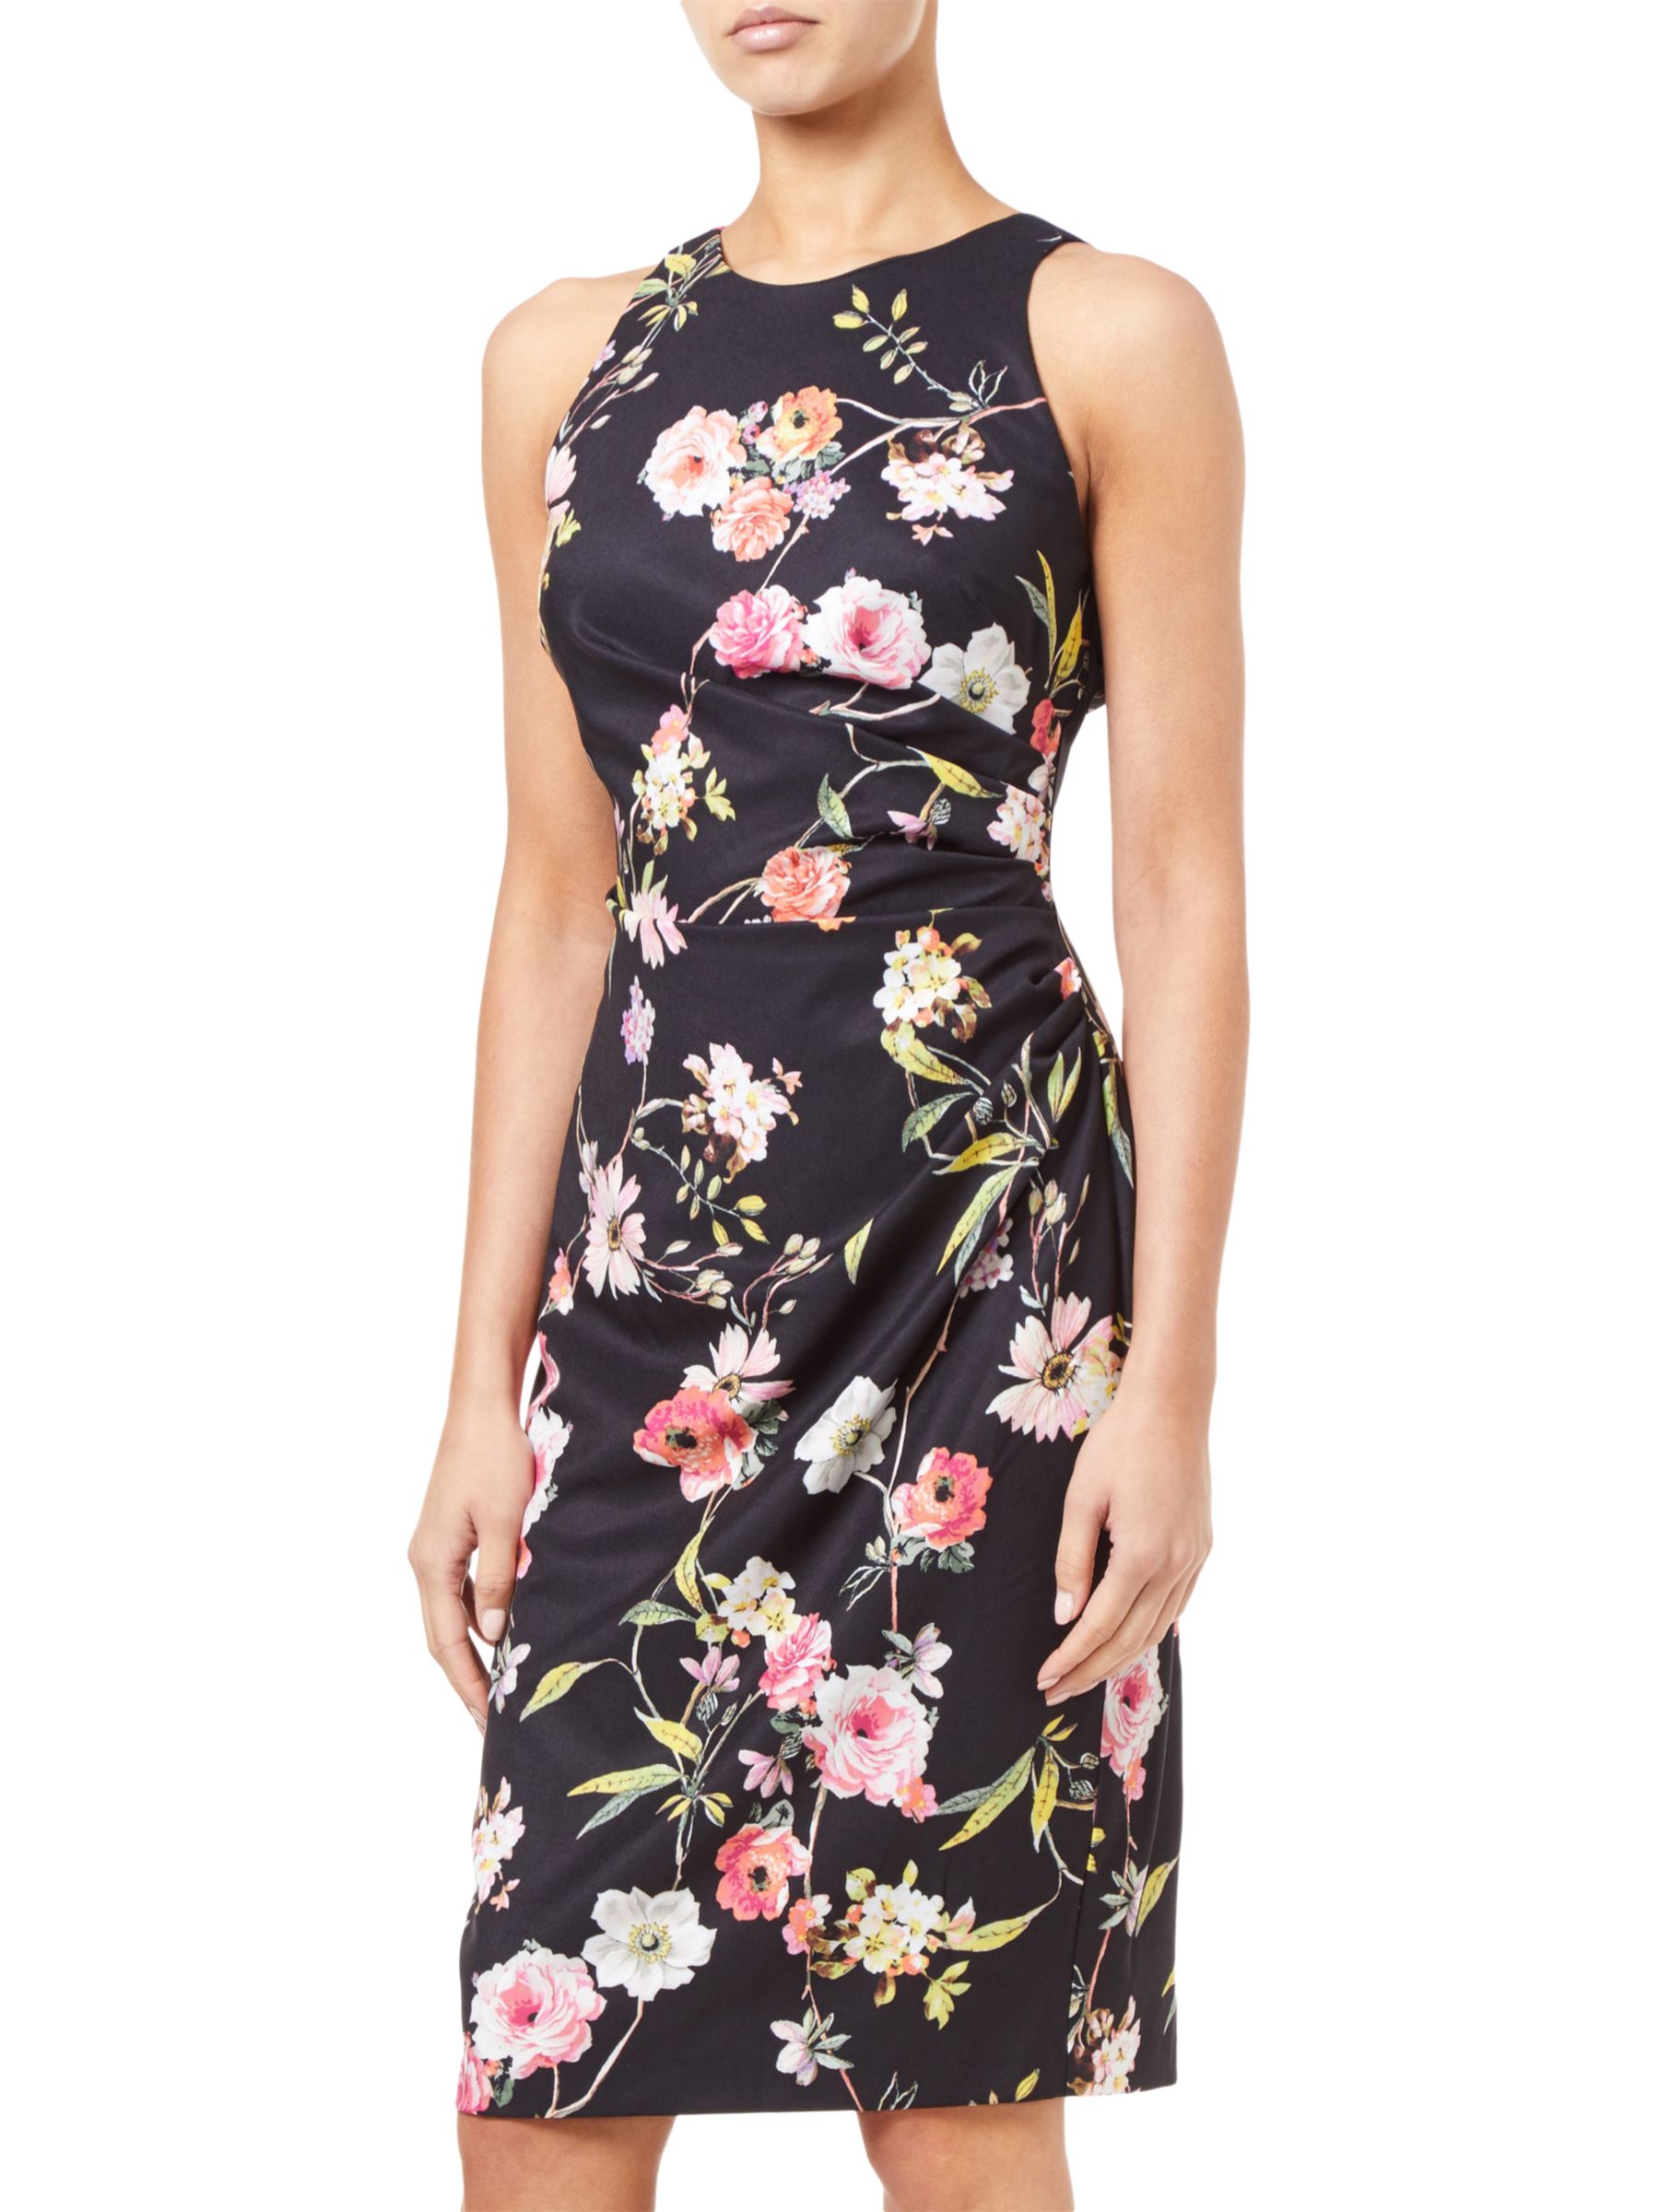 Adrianna Papell Sheath Ruche Floral Dress, Black/Multi